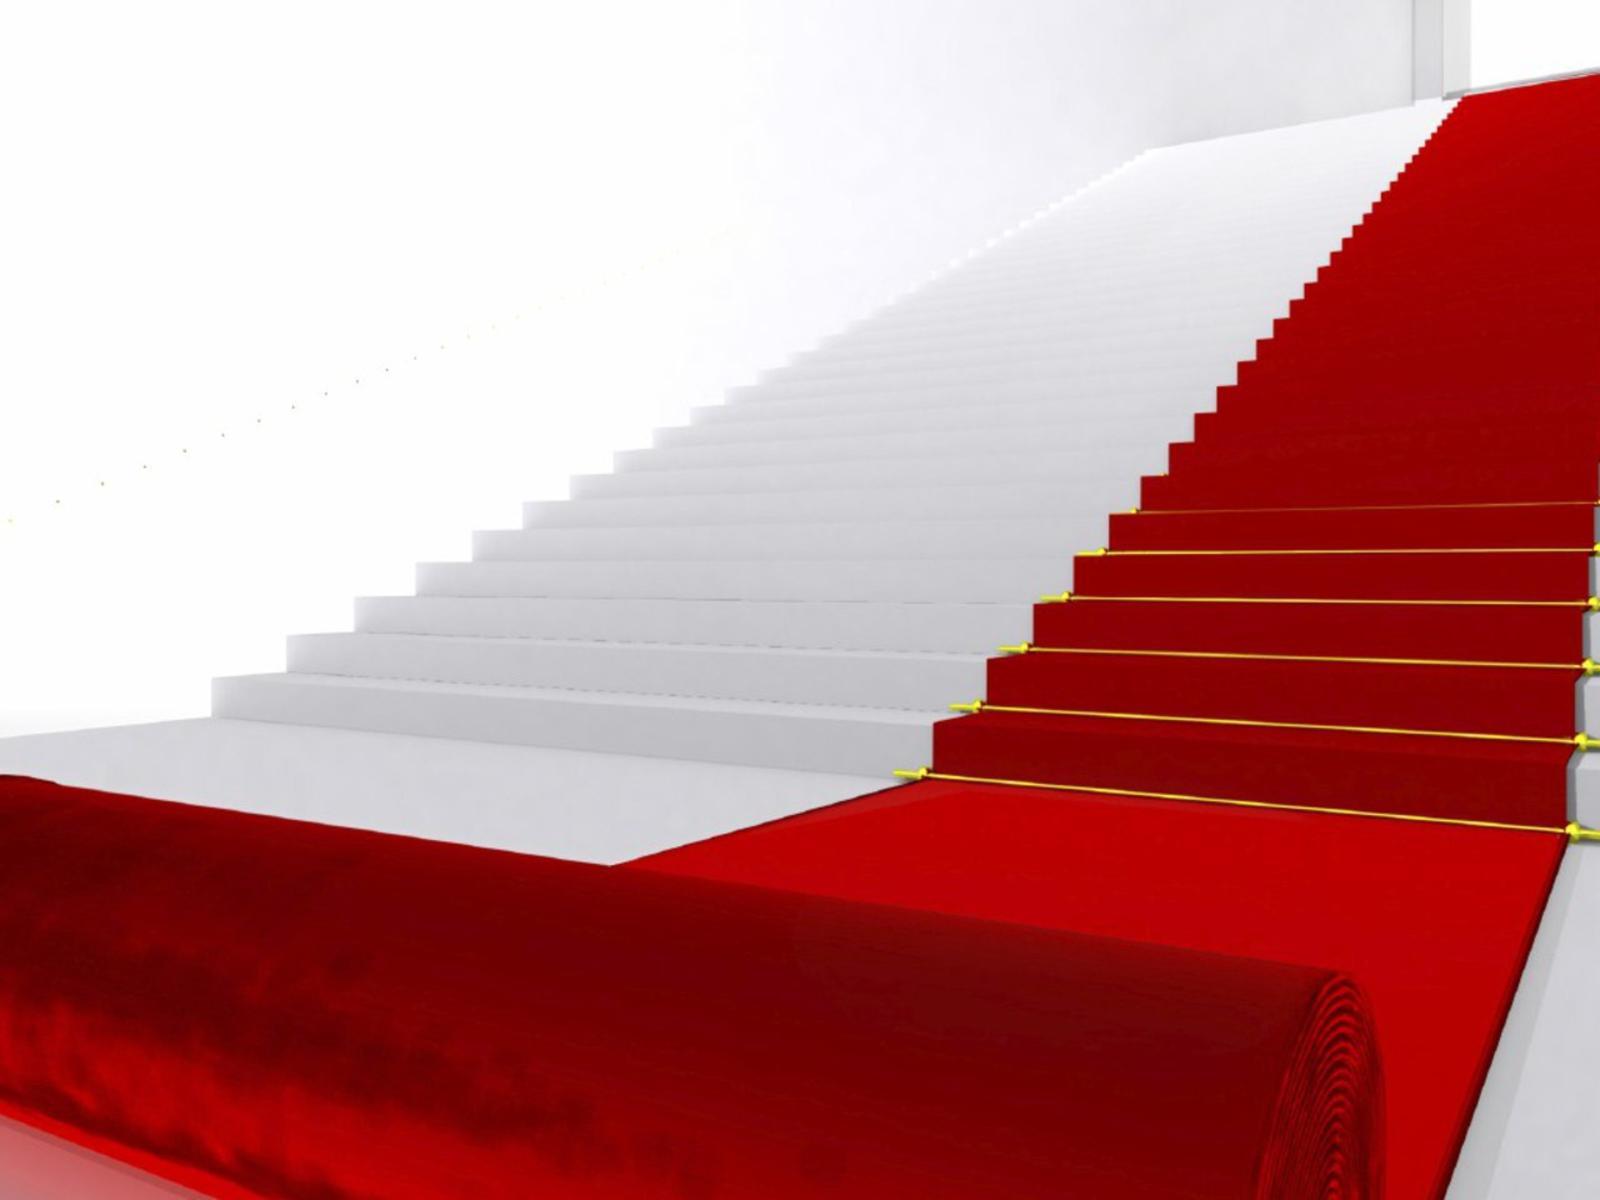 Red carpet free desktop background wallpaper image